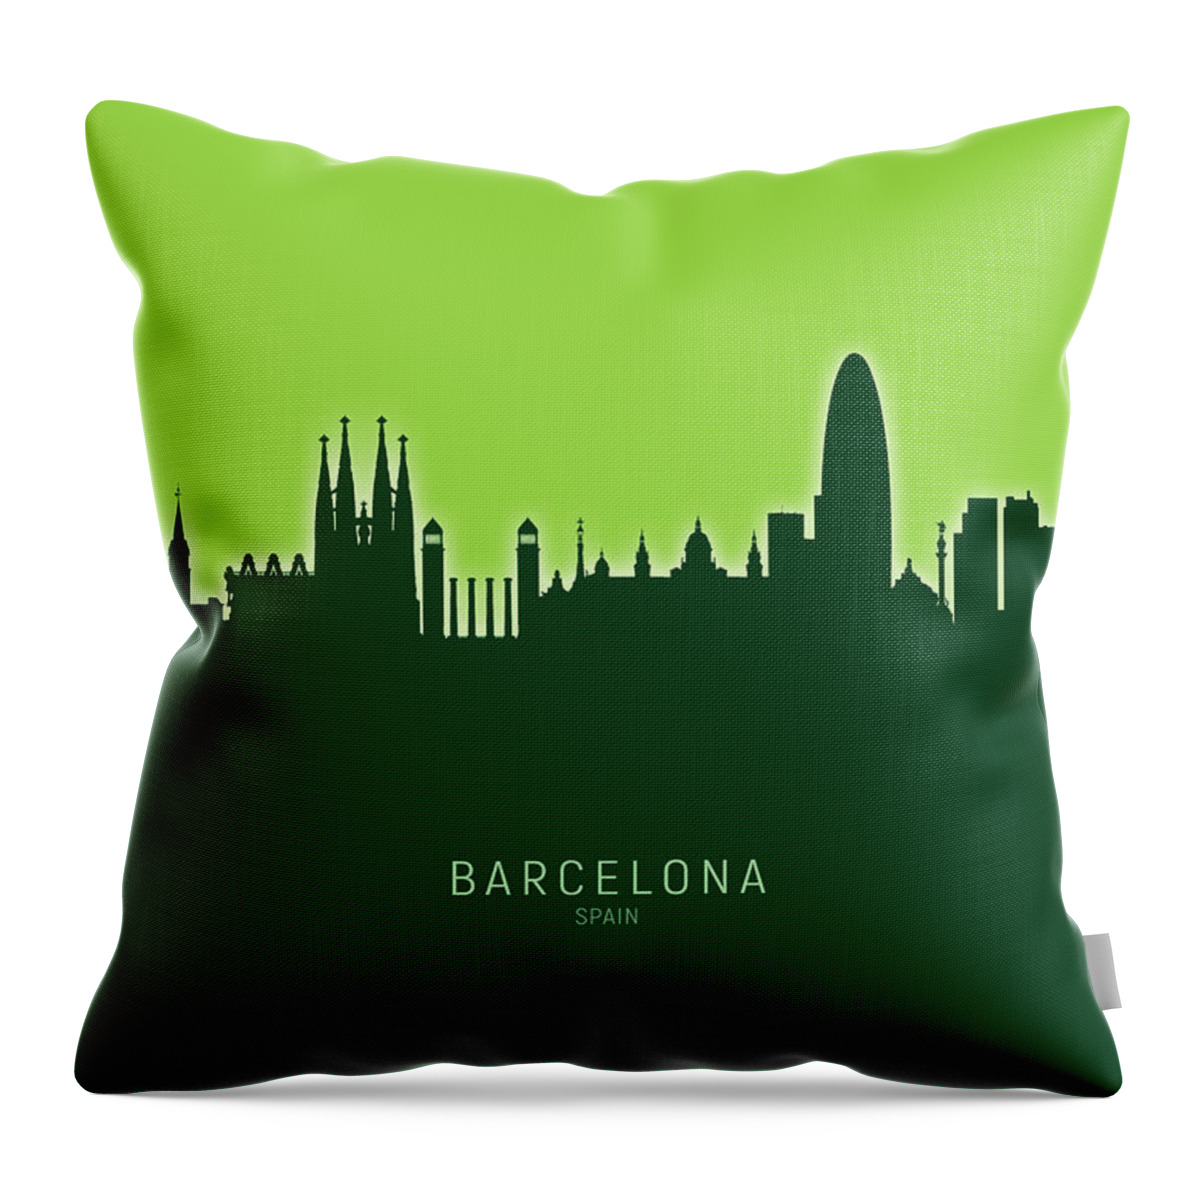 Barcelona Throw Pillow featuring the digital art Barcelona Spain Skyline #38 by Michael Tompsett